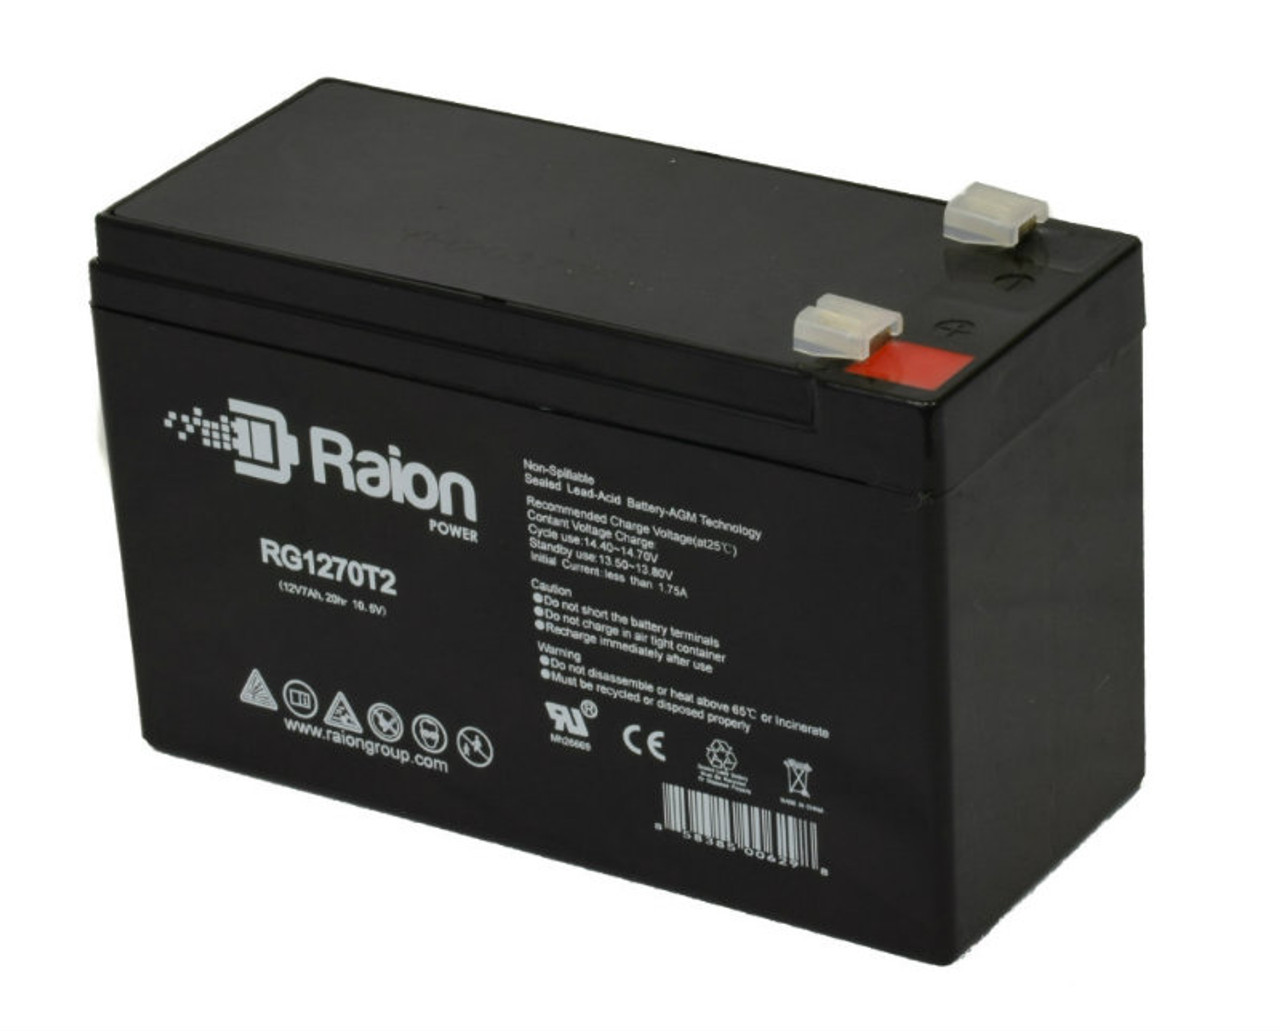 Raion Power Replacement 12V 7Ah RG1270T1 Fire Alarm Battery for Altronix AL600ULPD8CB